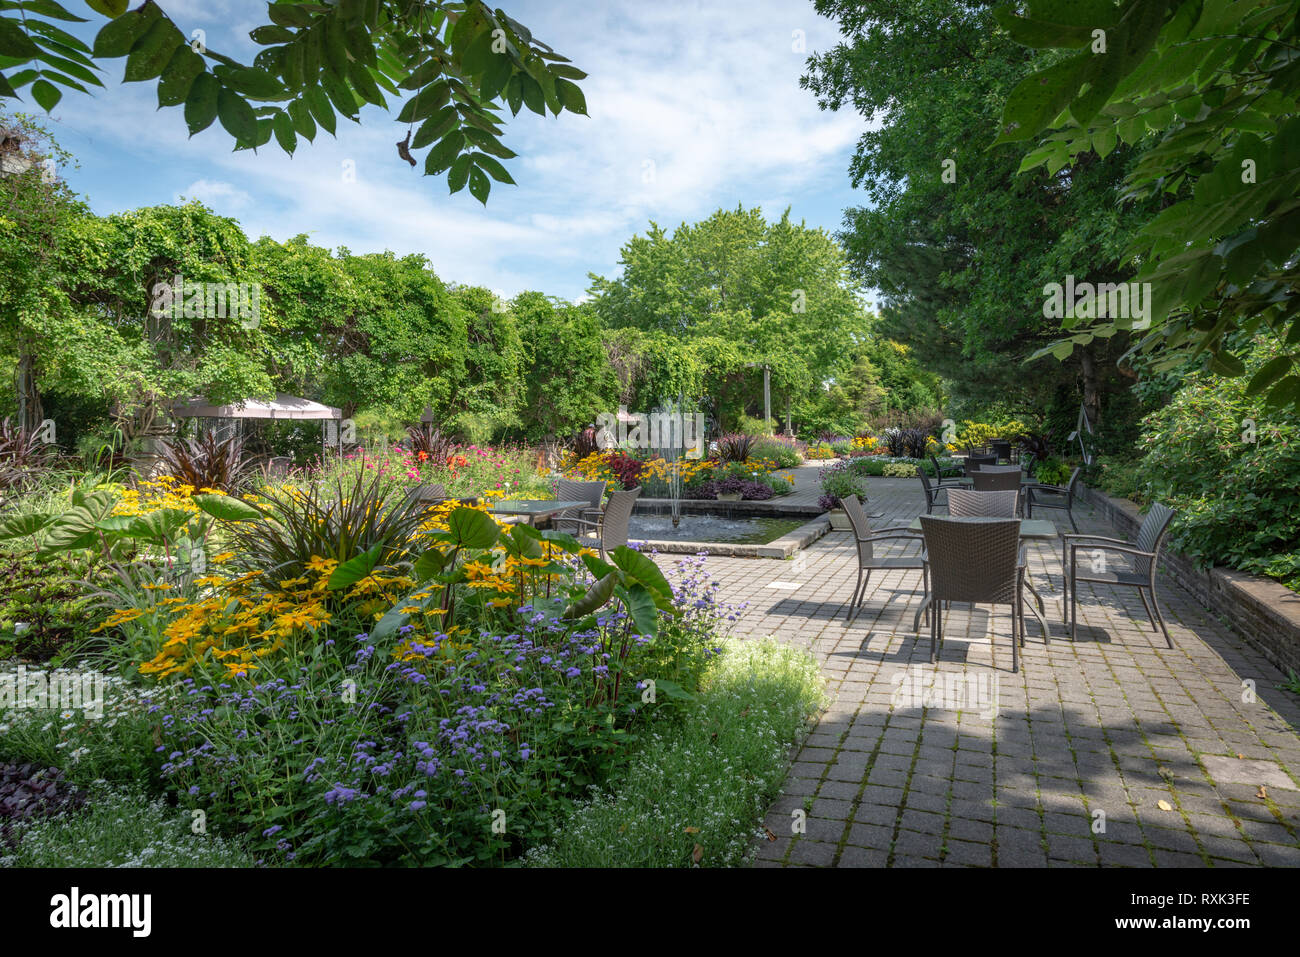 Daniel A. Seguin garden, visitor center front garden with various annuals seating area, Saint-Hyacinthe, province of Quebec, Canada Stock Photo